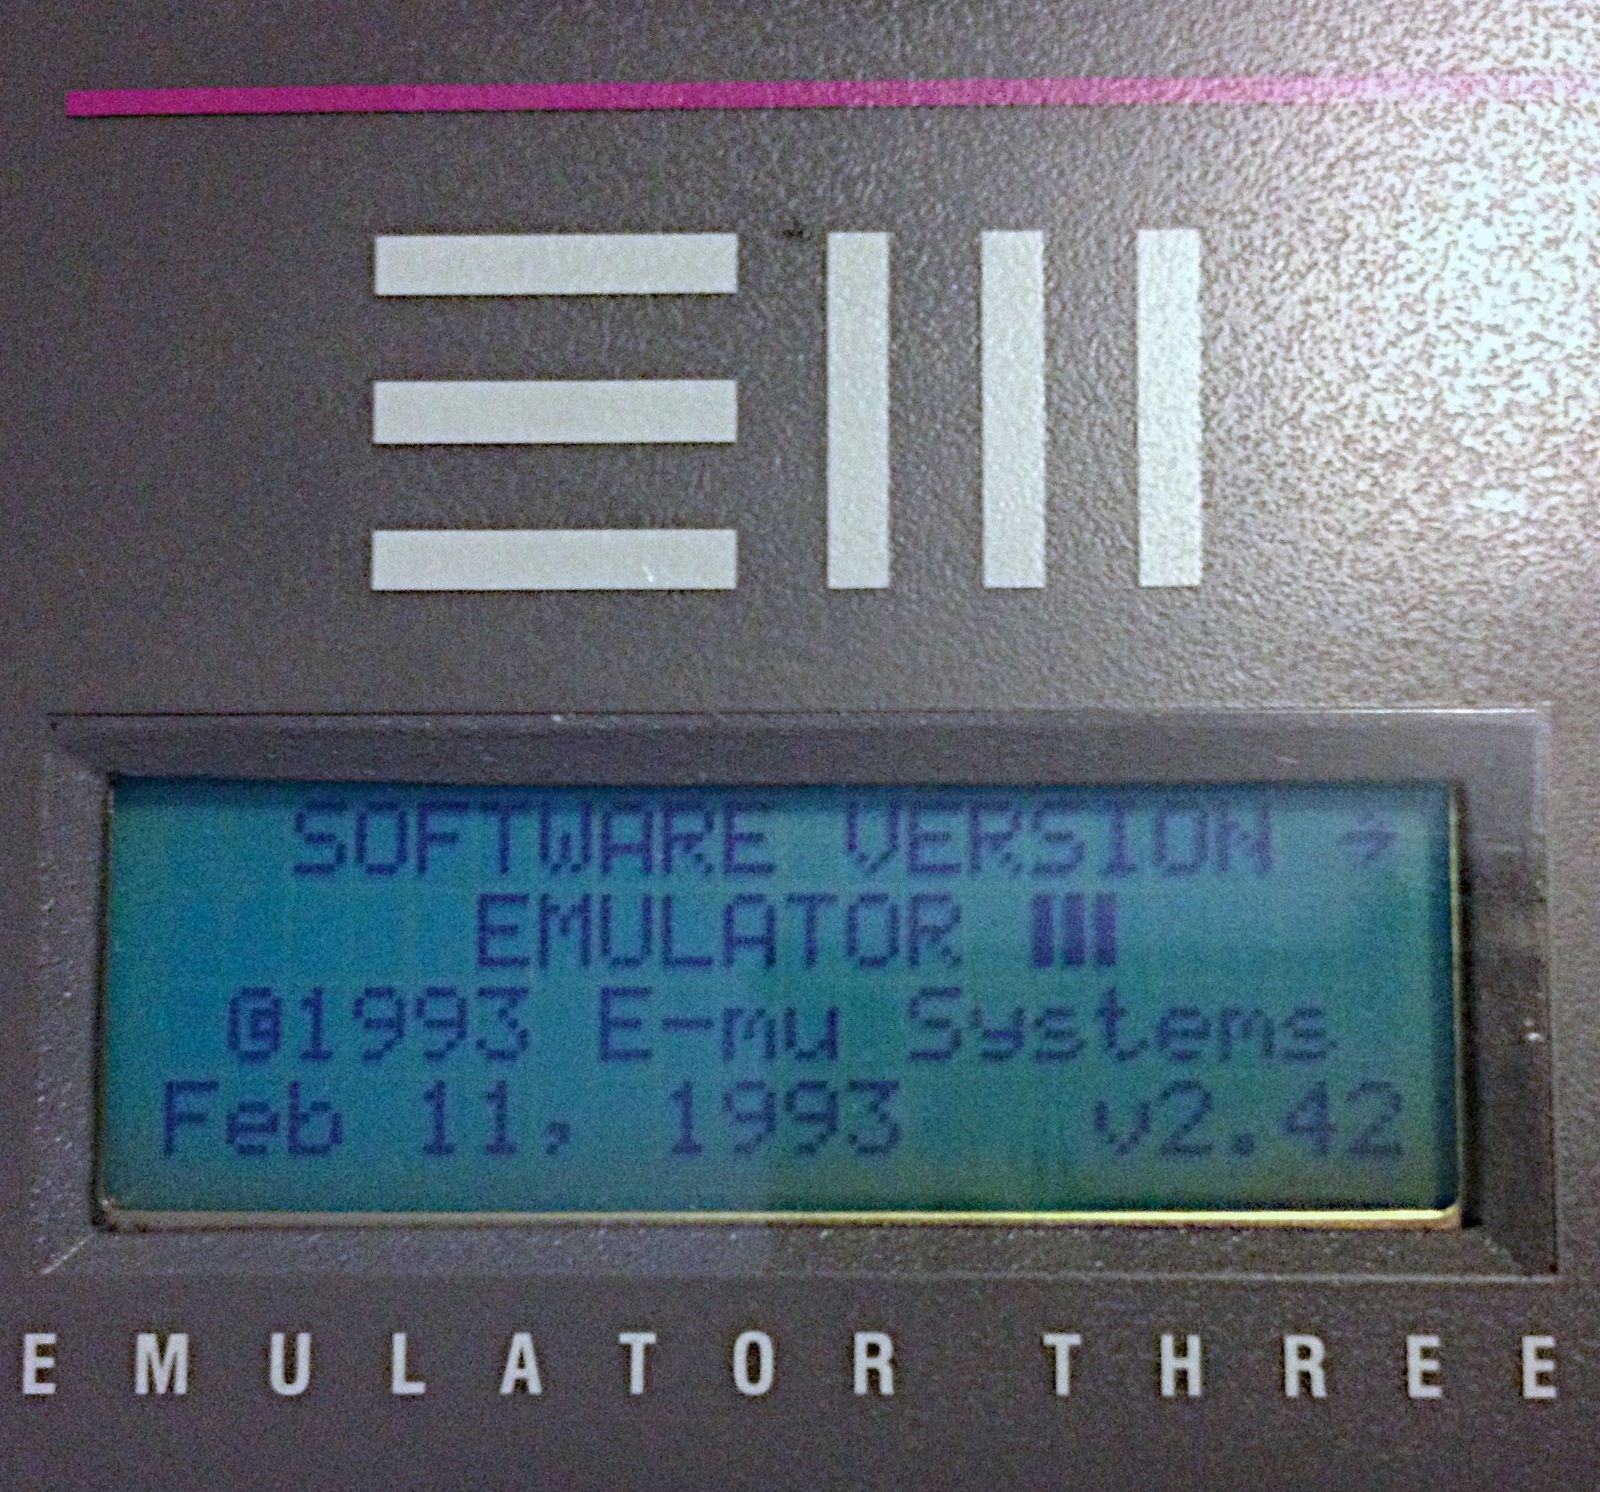 sp1200 emulator mac